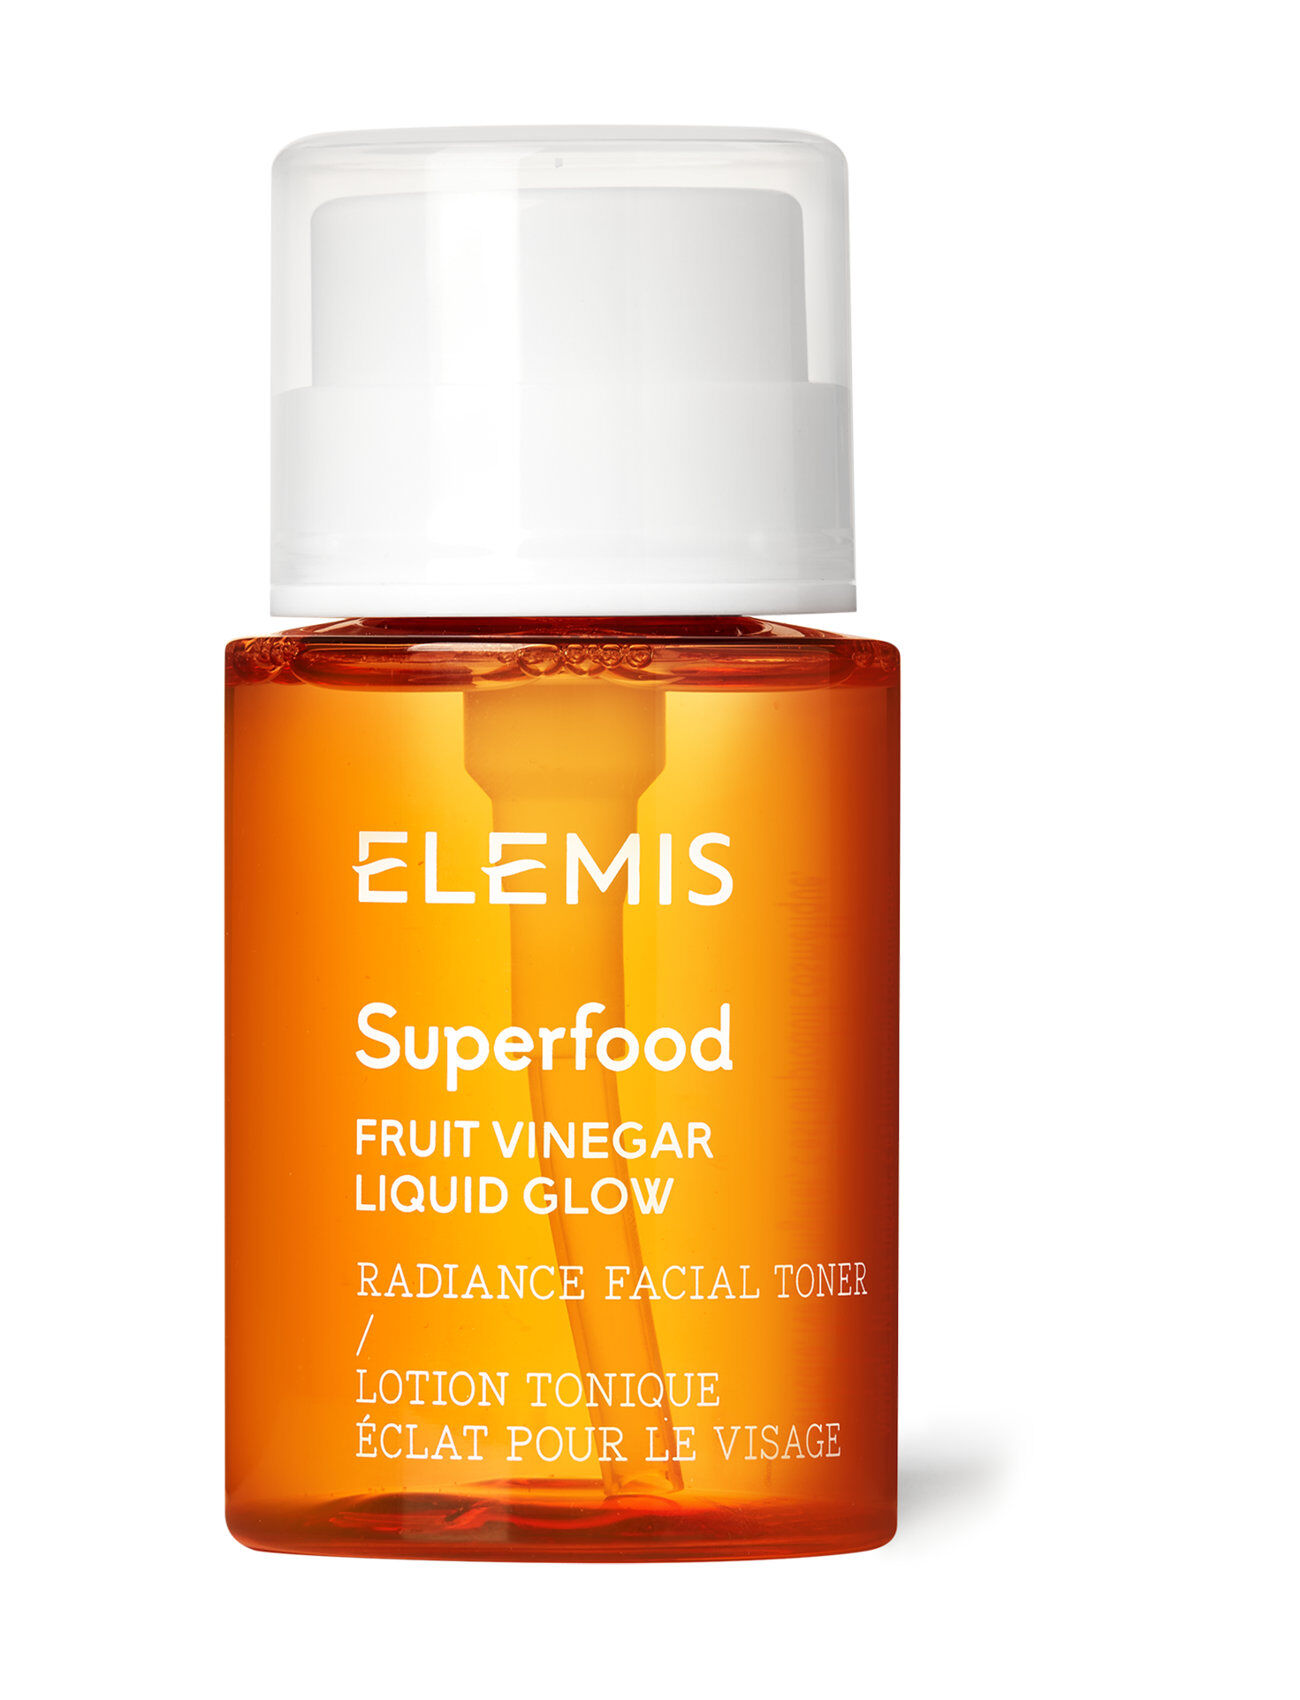 Elemis Superfood Fruit Vinegar Liquid Glow Beauty WOMEN Skin Care Face T Rs Nude Elemis